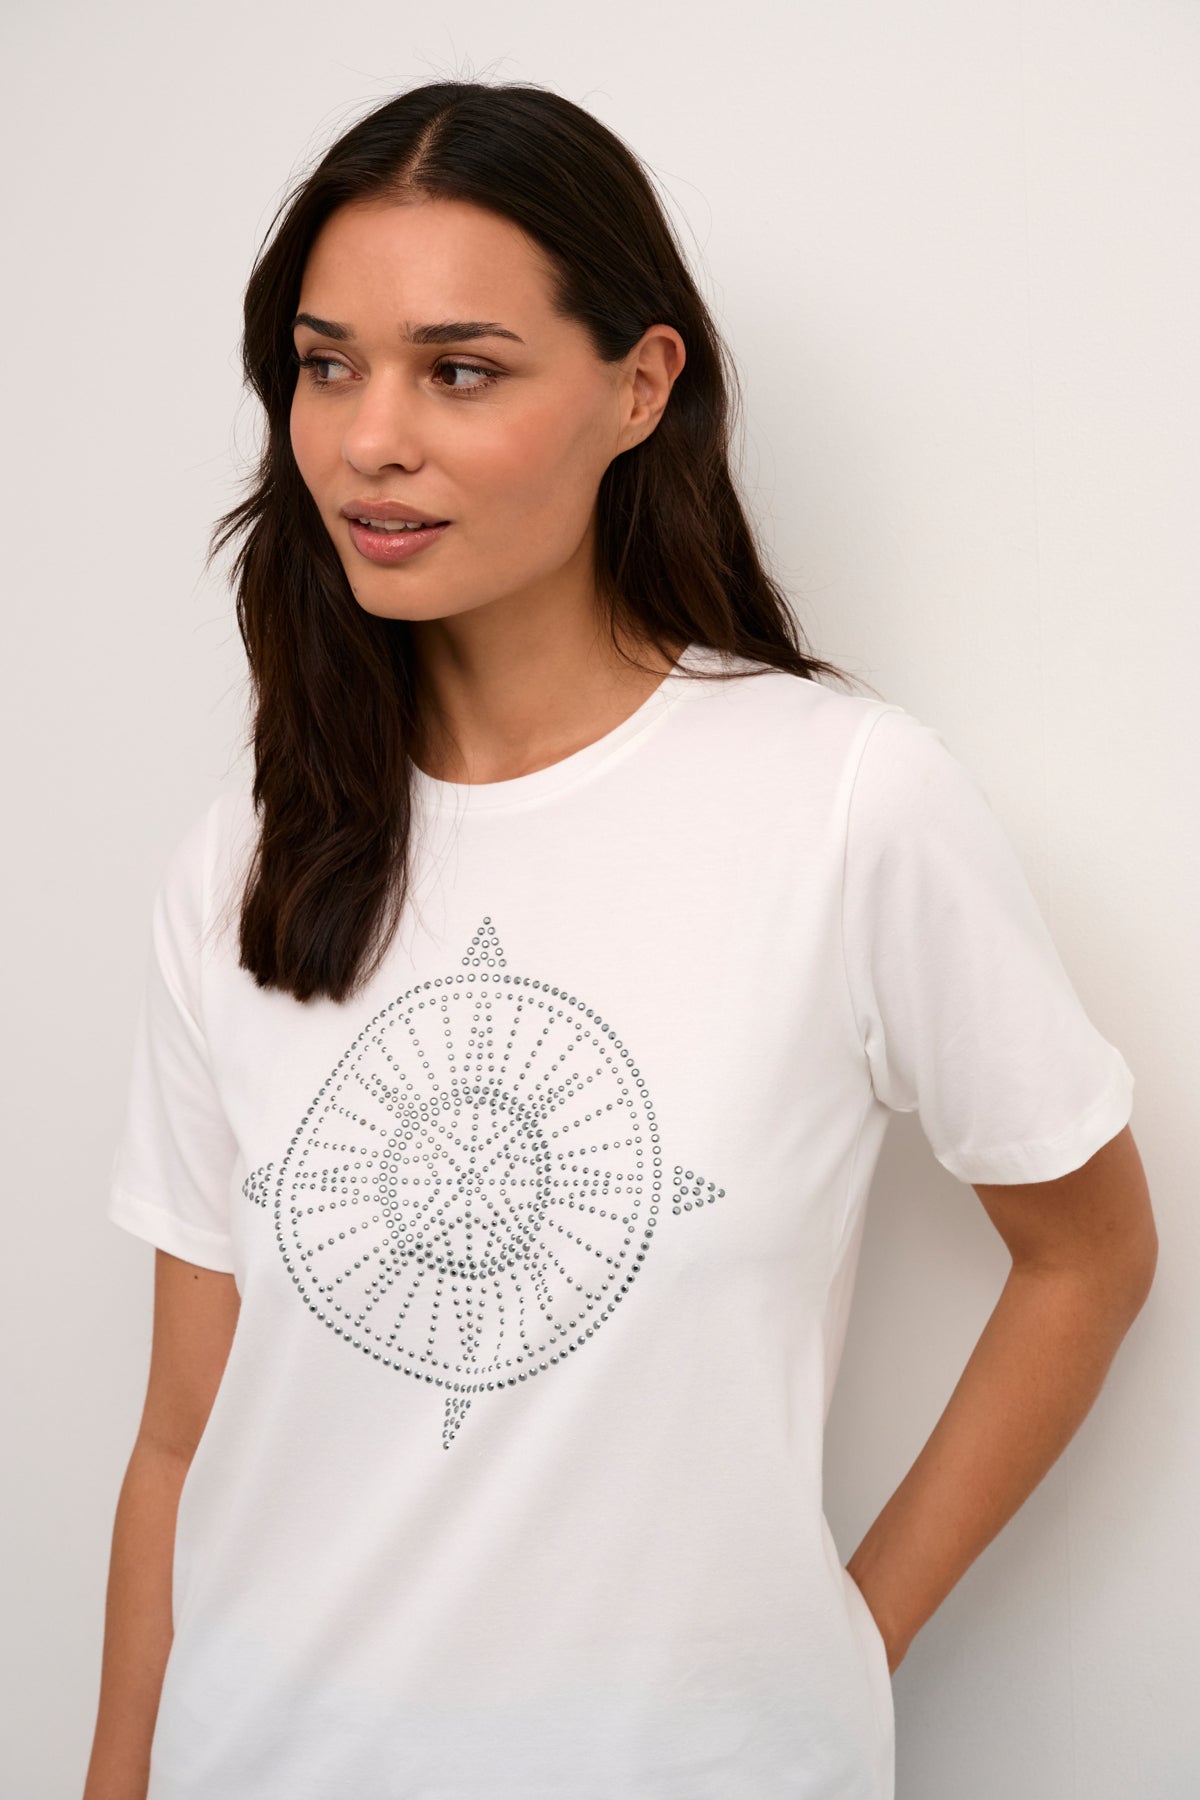 Gith Compass T-Shirt in Spring Gardenia